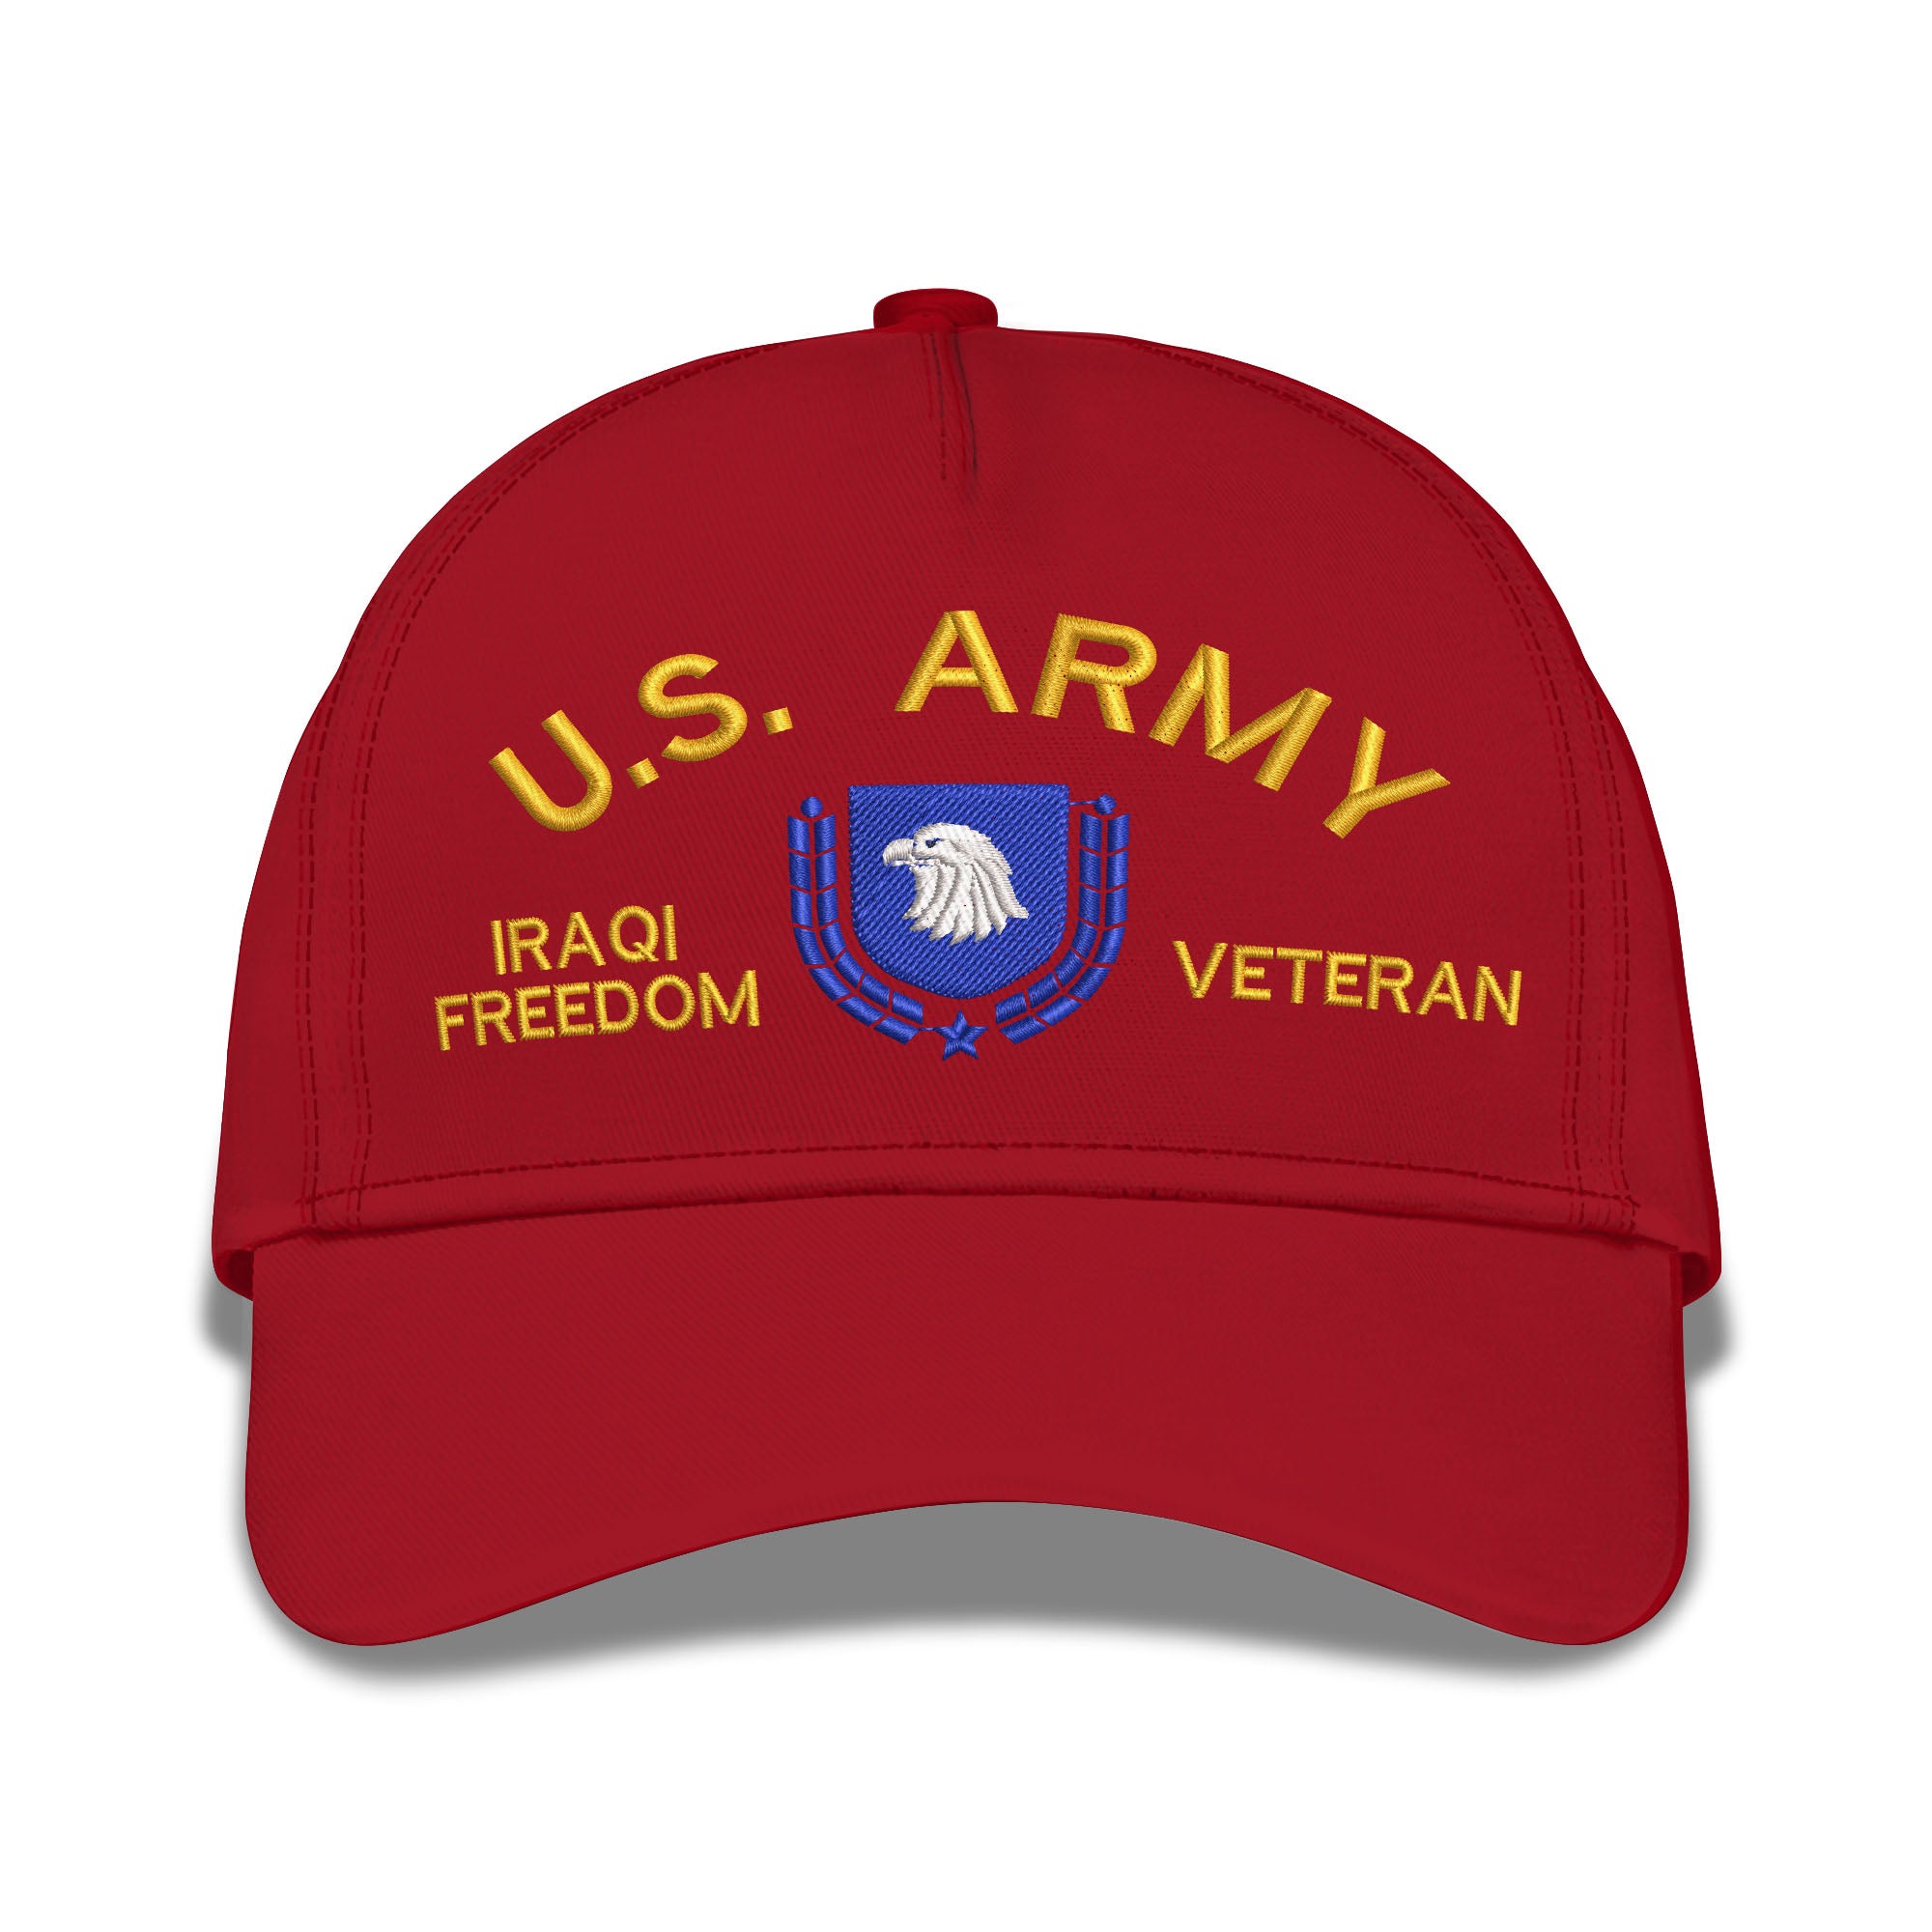 U.S. ARMY Veteran Embroidered Baseball Caps